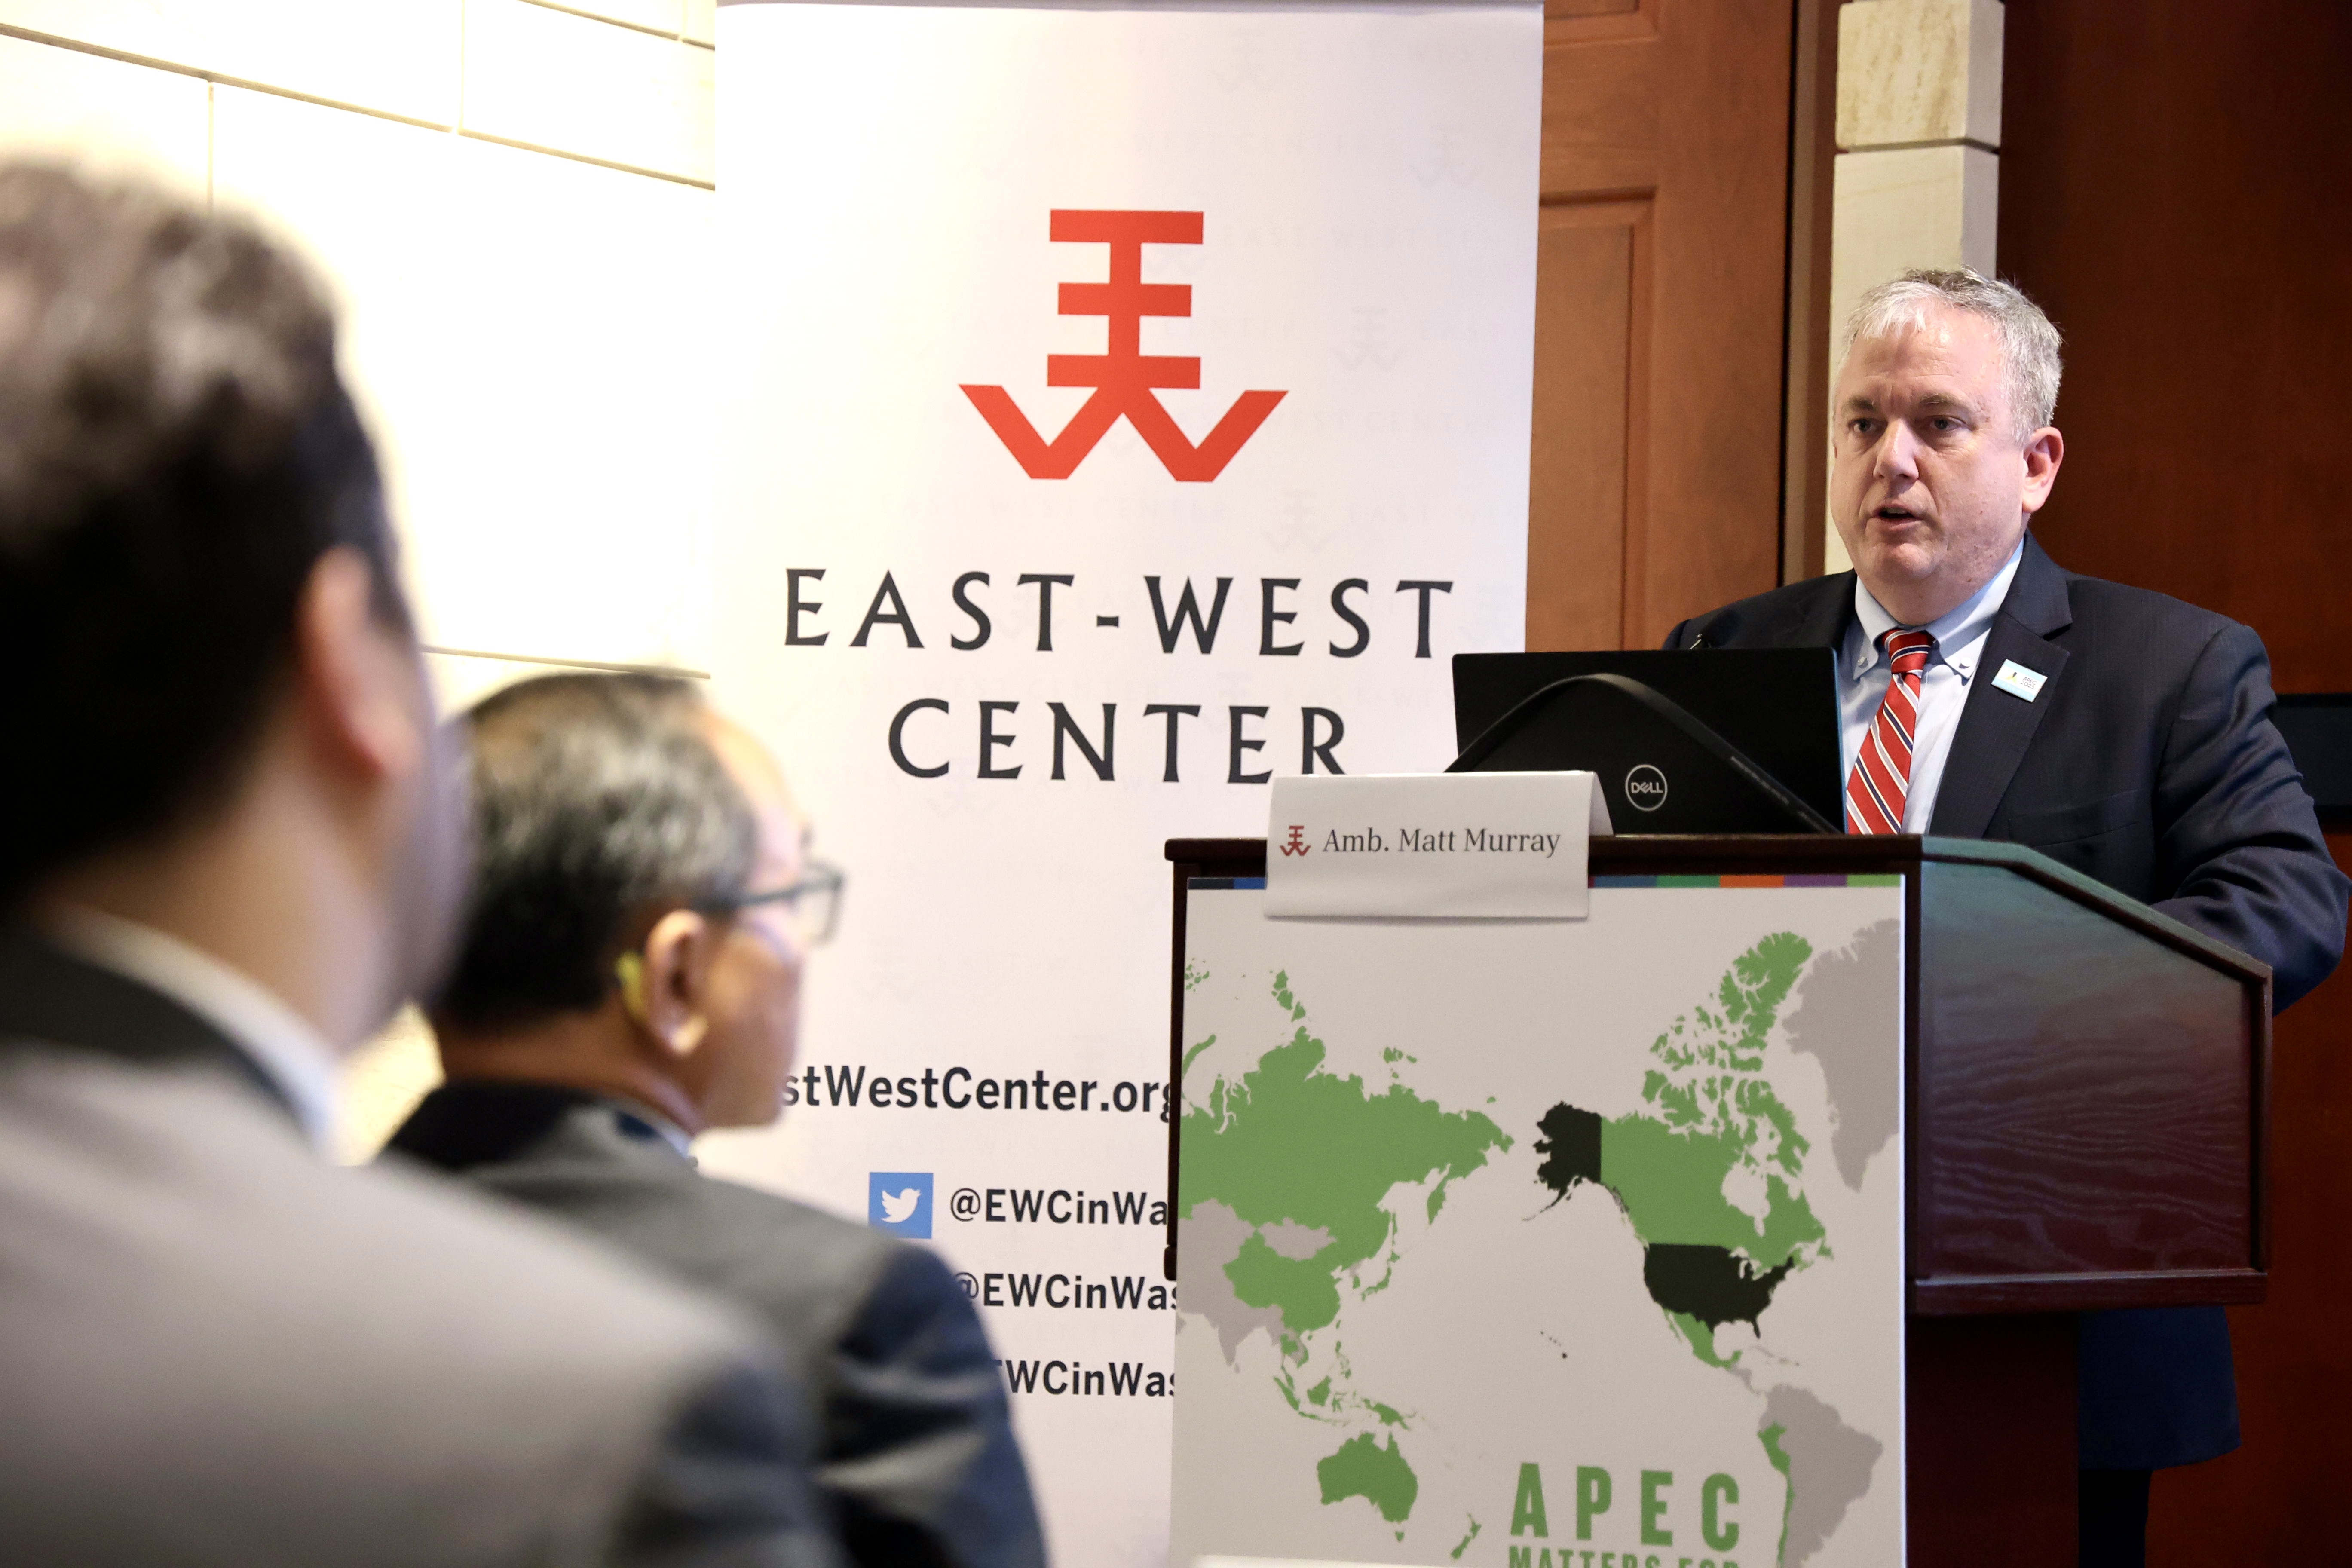 A man in a suit (Ambassador Matt Murray) speaks at a podium in front of an audience beside an East-West Center banner.